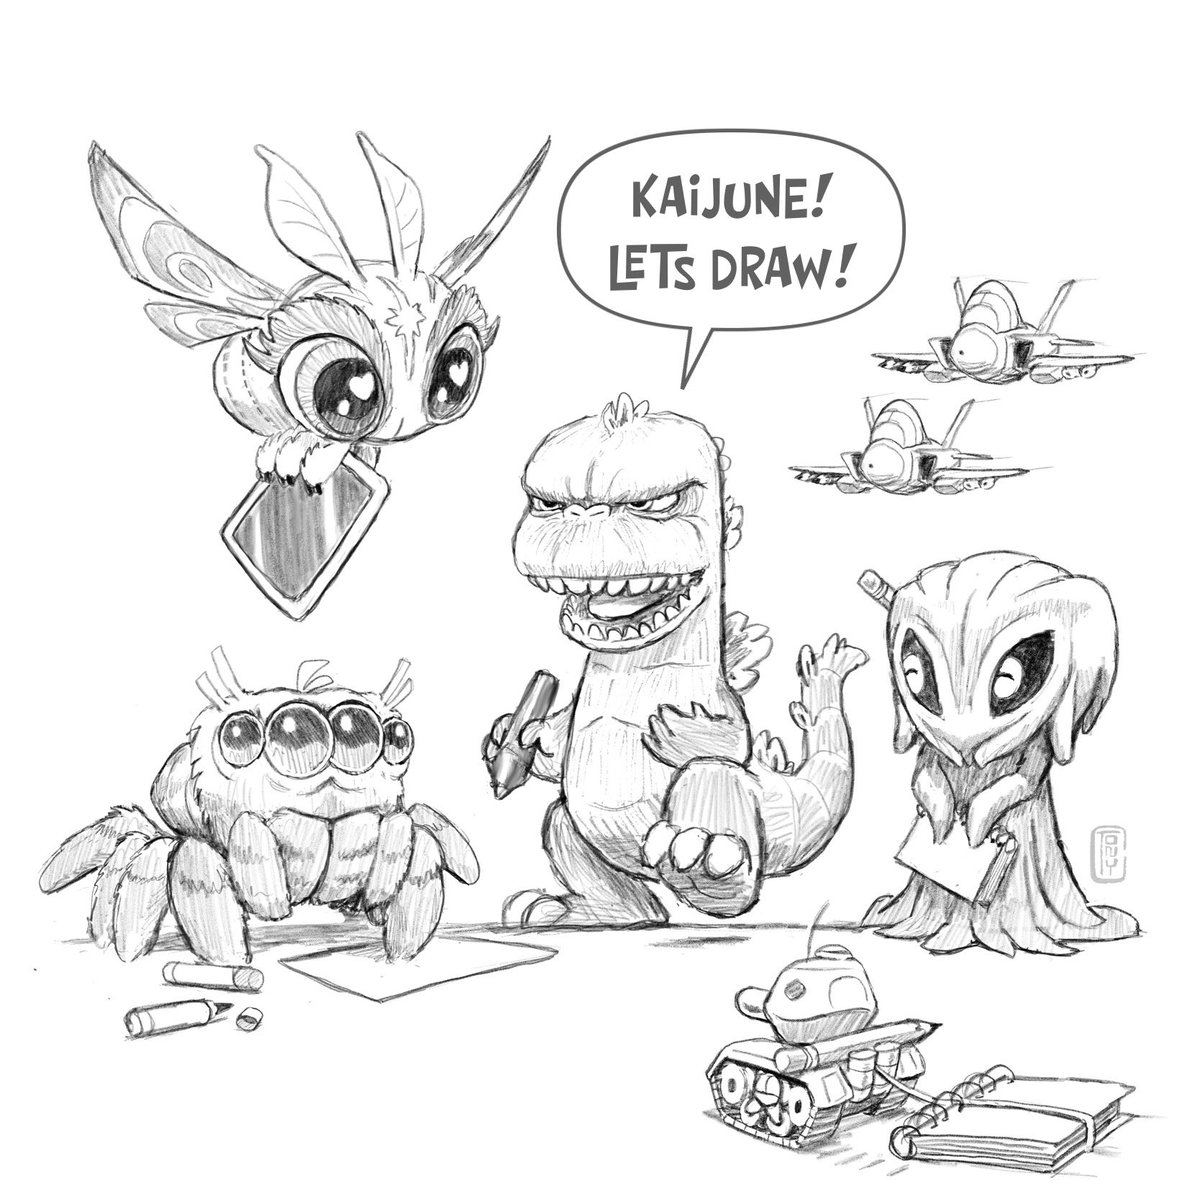 It's #KaiJune 2023! time to doodle some #kaiju! #kaijune2023 #kaijune23 
#monster #creaturedesign #creatures #monsterdesign #Godzilla #Mothra #Hedorah #Kumonga #adobefresco 
...
I'm not following any specific prompts. Just plan to doodle whatever Kaiju inspires me that day.